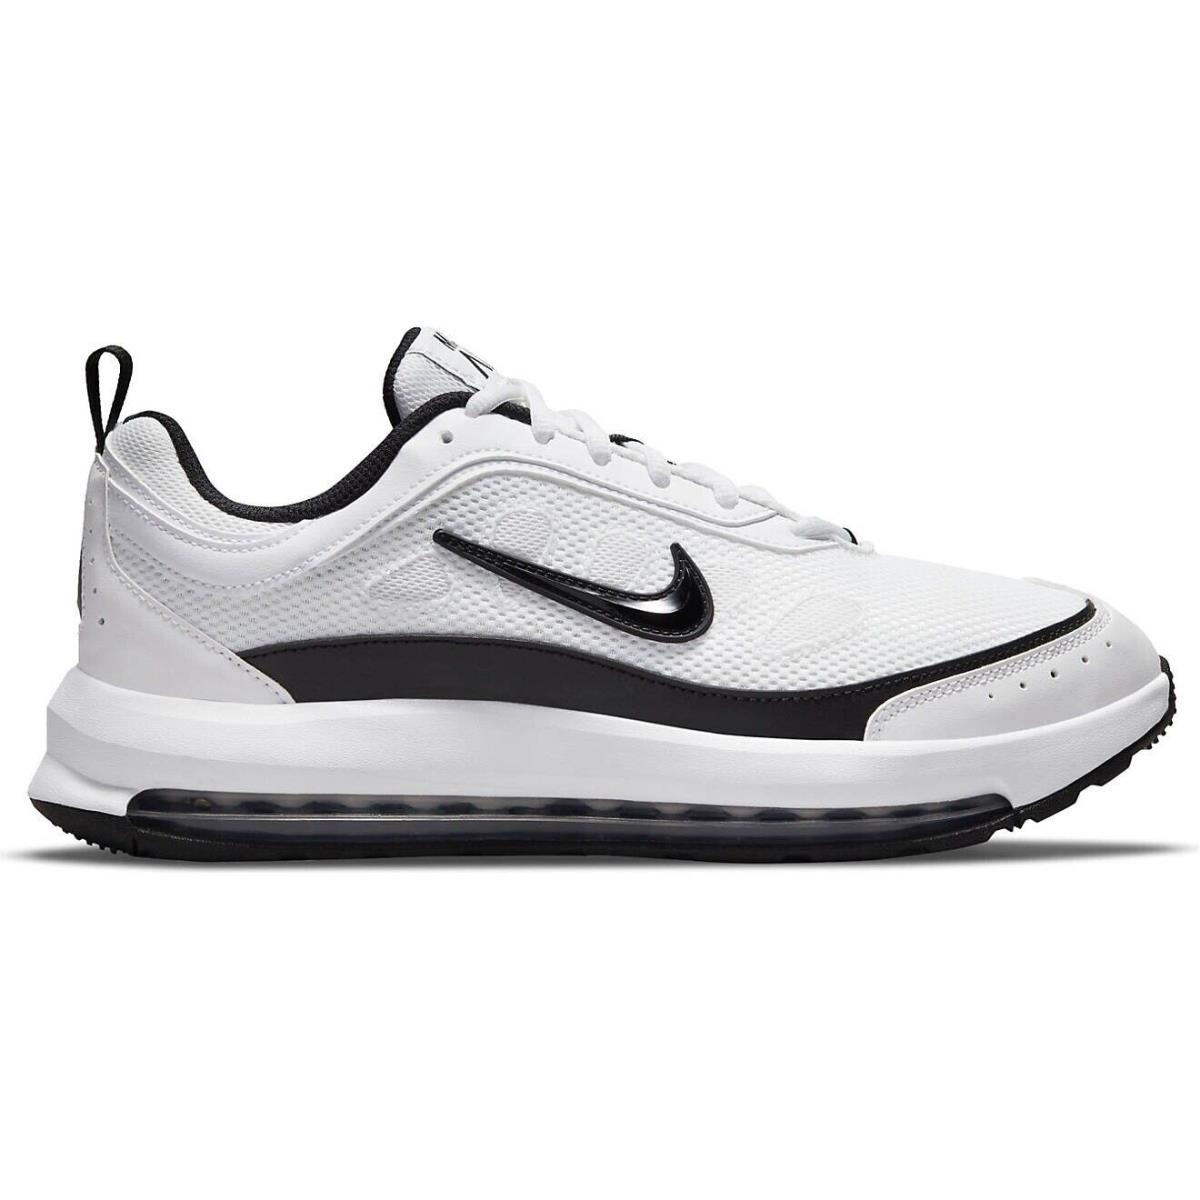 Men Nike Air Max AP Running Shoes Sneakers Size 12 White Black CU4826 100